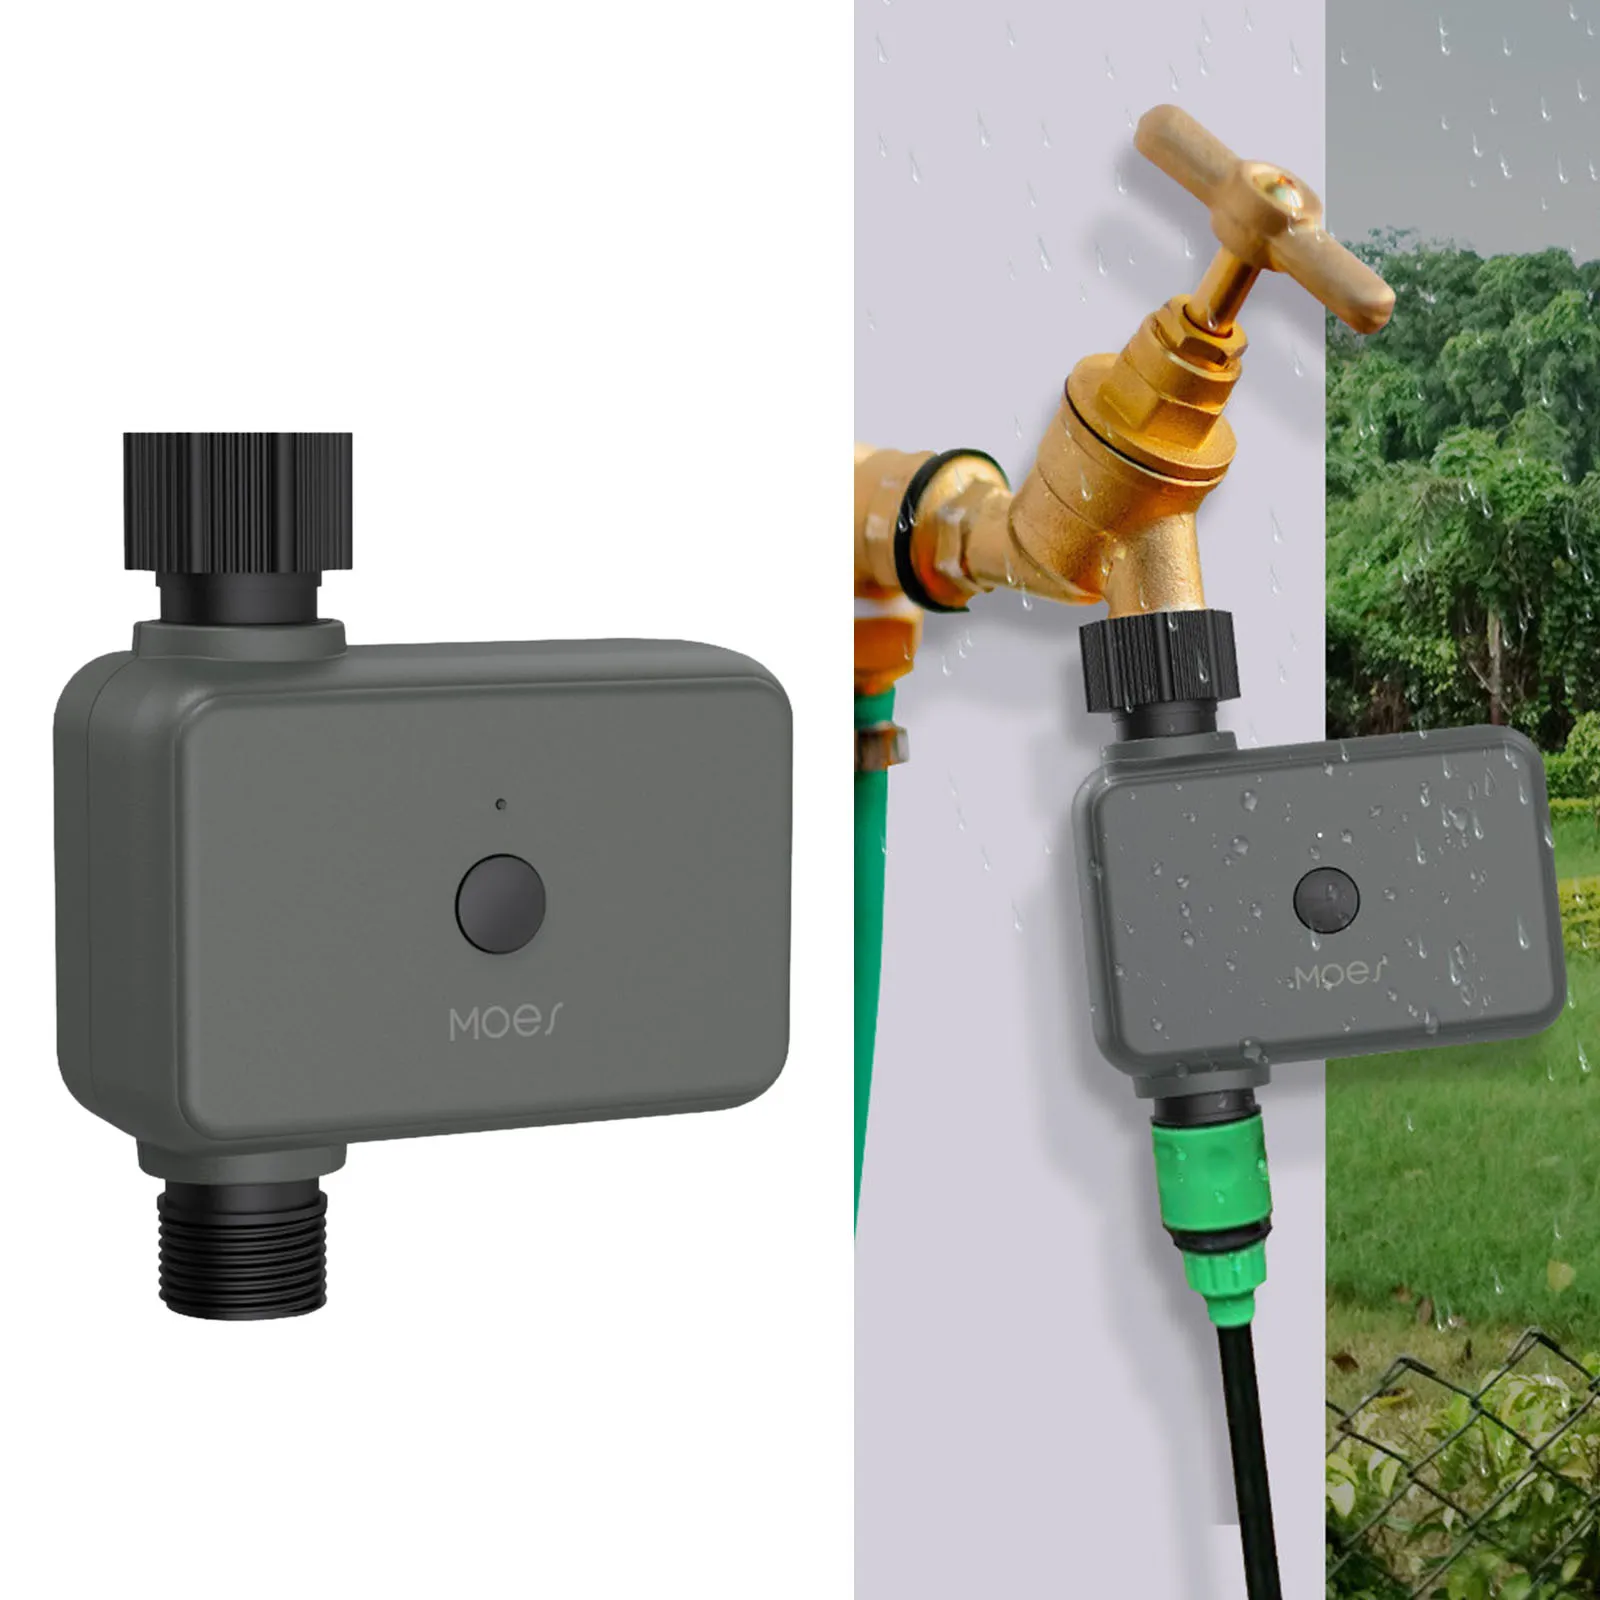 Bluetooth  Water Timer Faucet for Garden Yard 15M/50FT Range